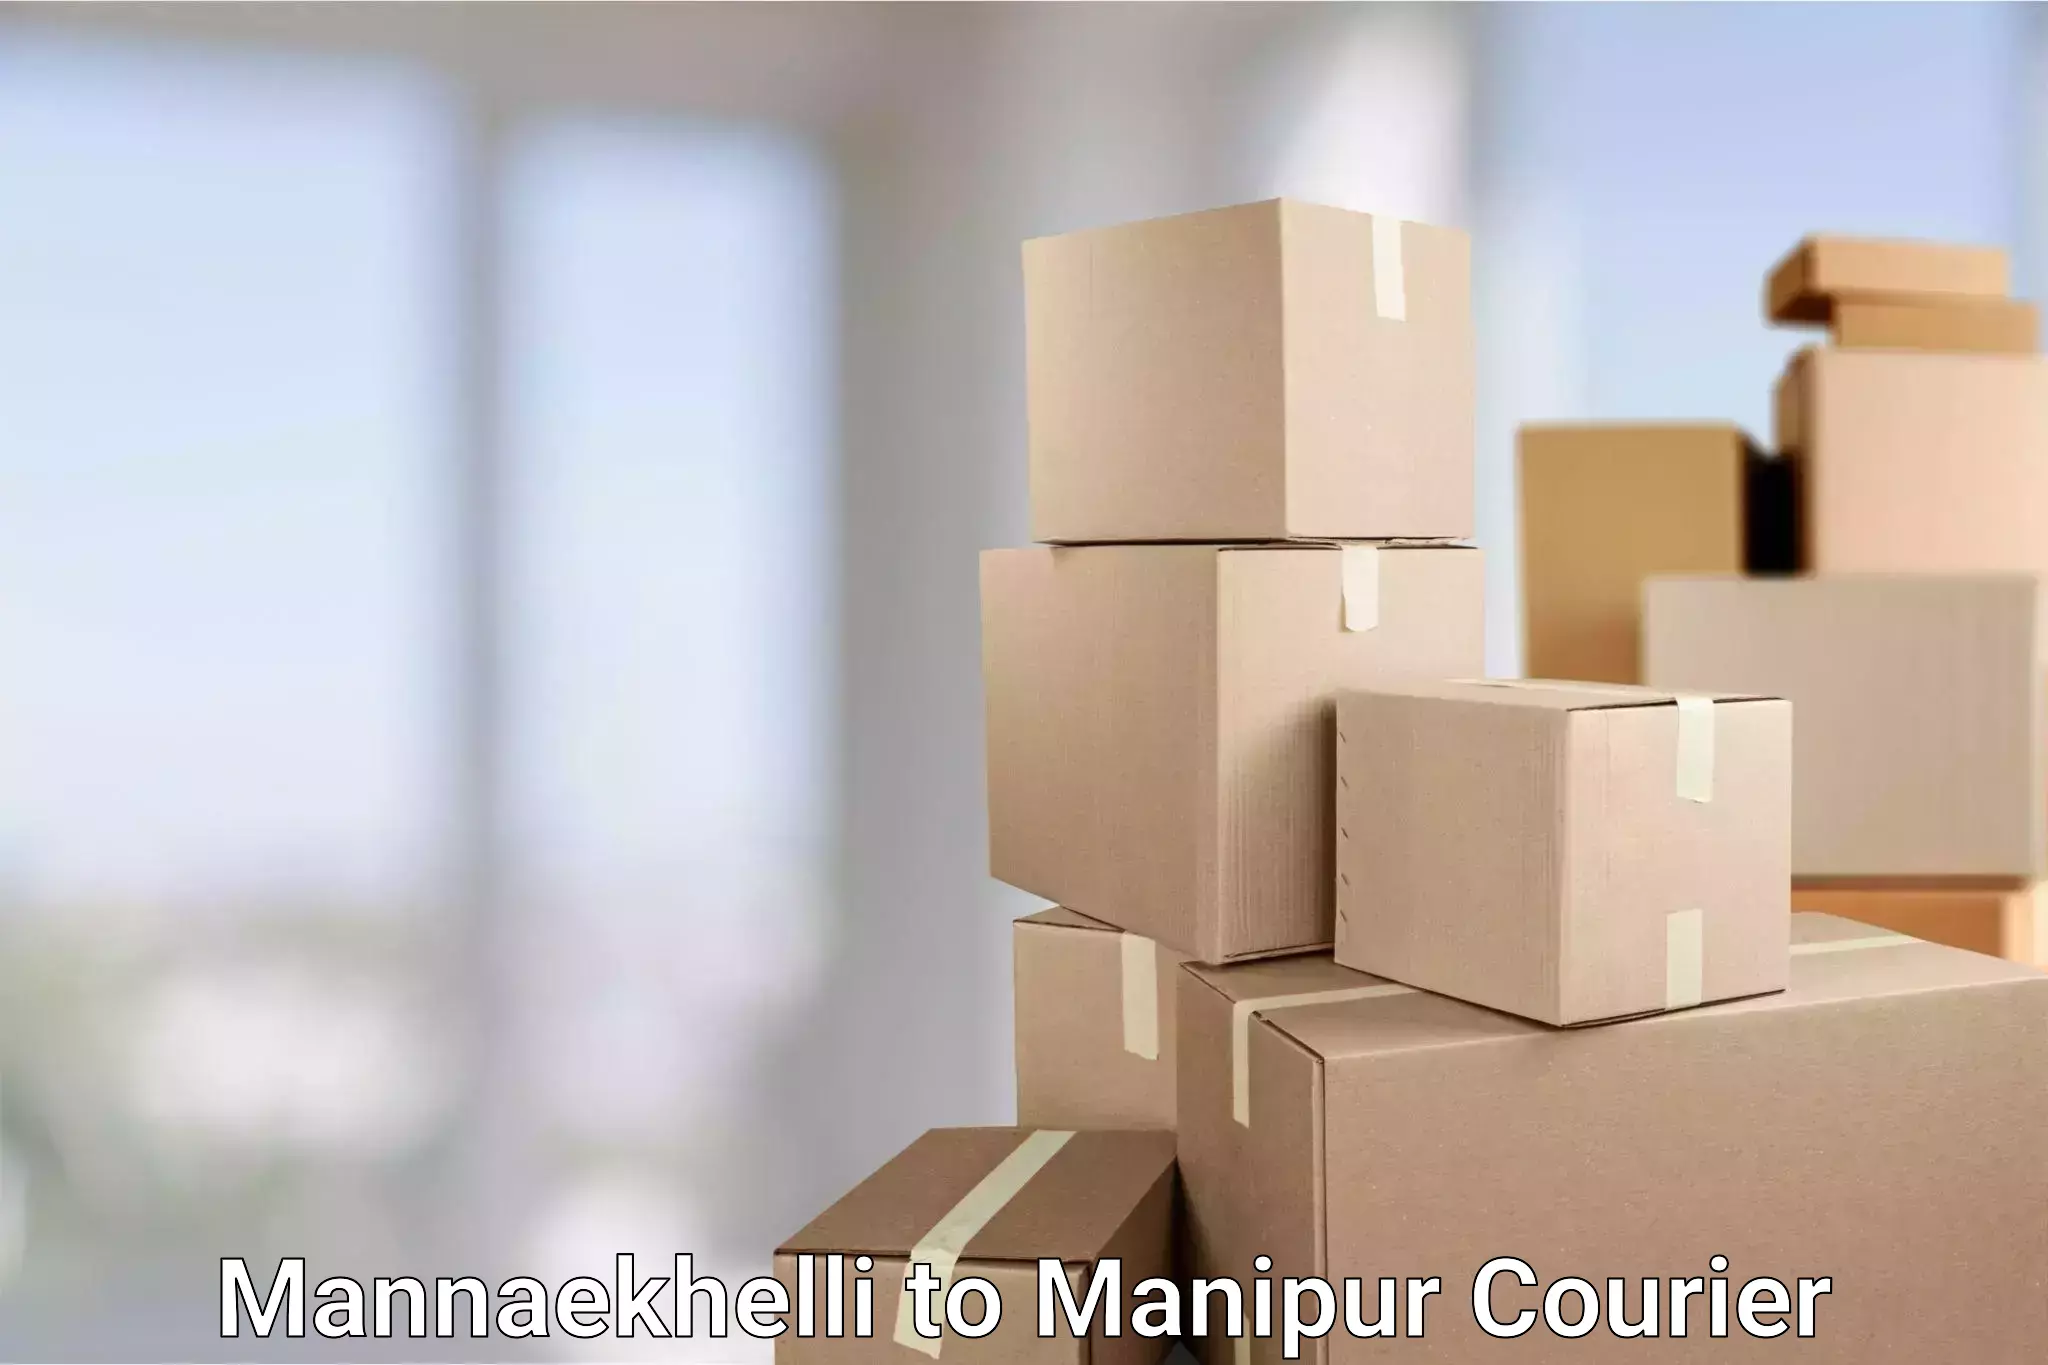 Optimized delivery routes Mannaekhelli to Imphal